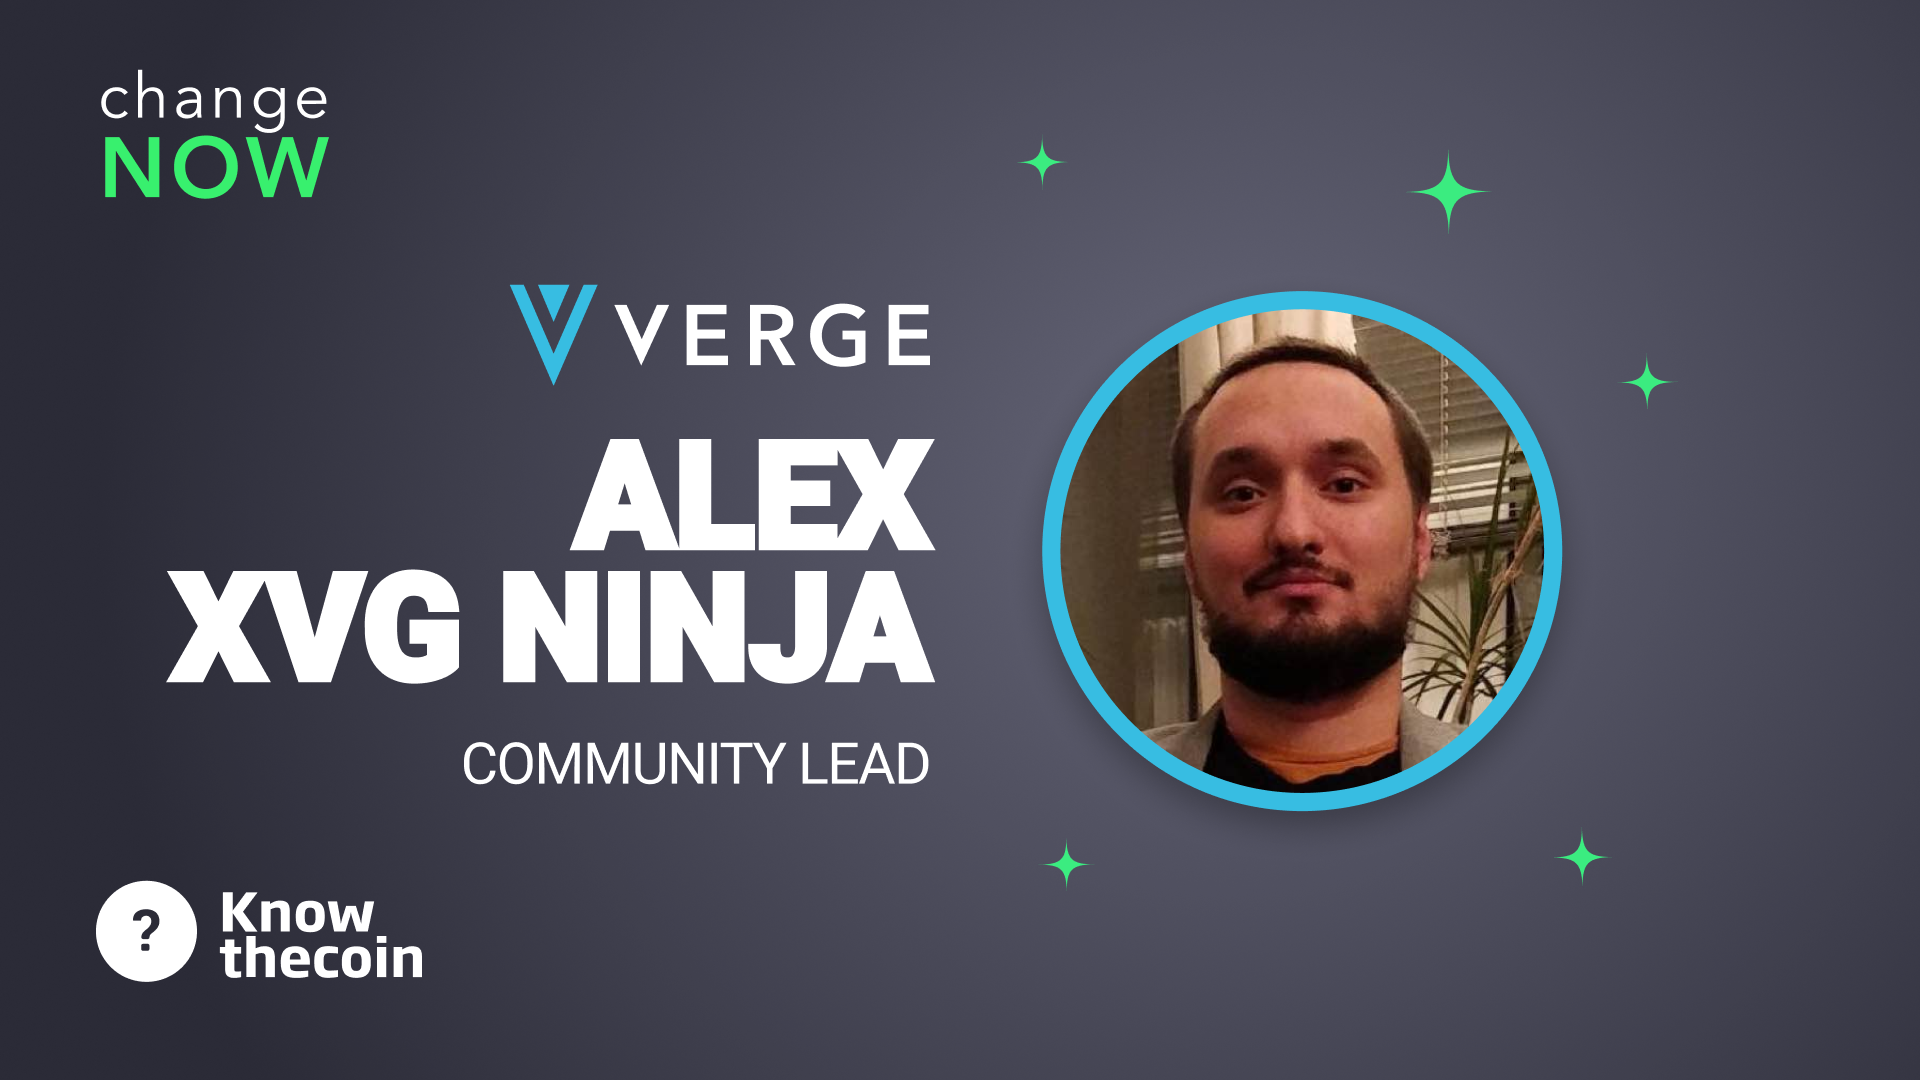 Know The Coin: Verge's Alex Ederer (aka XVG Ninja)